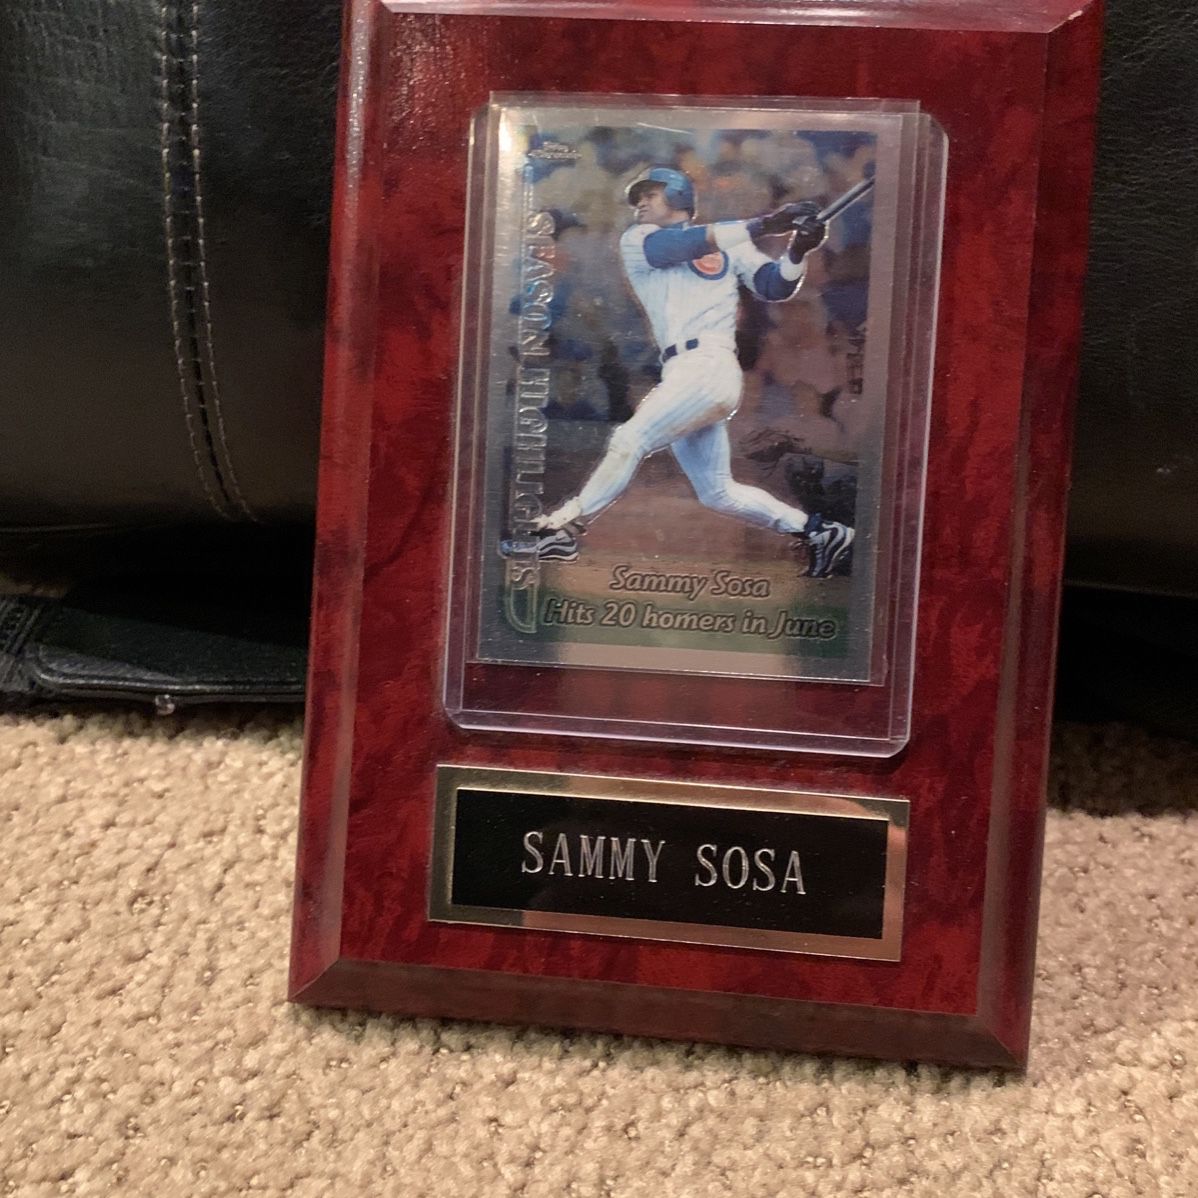 Sammy Sosa Plaque & Cubs Baseball Card